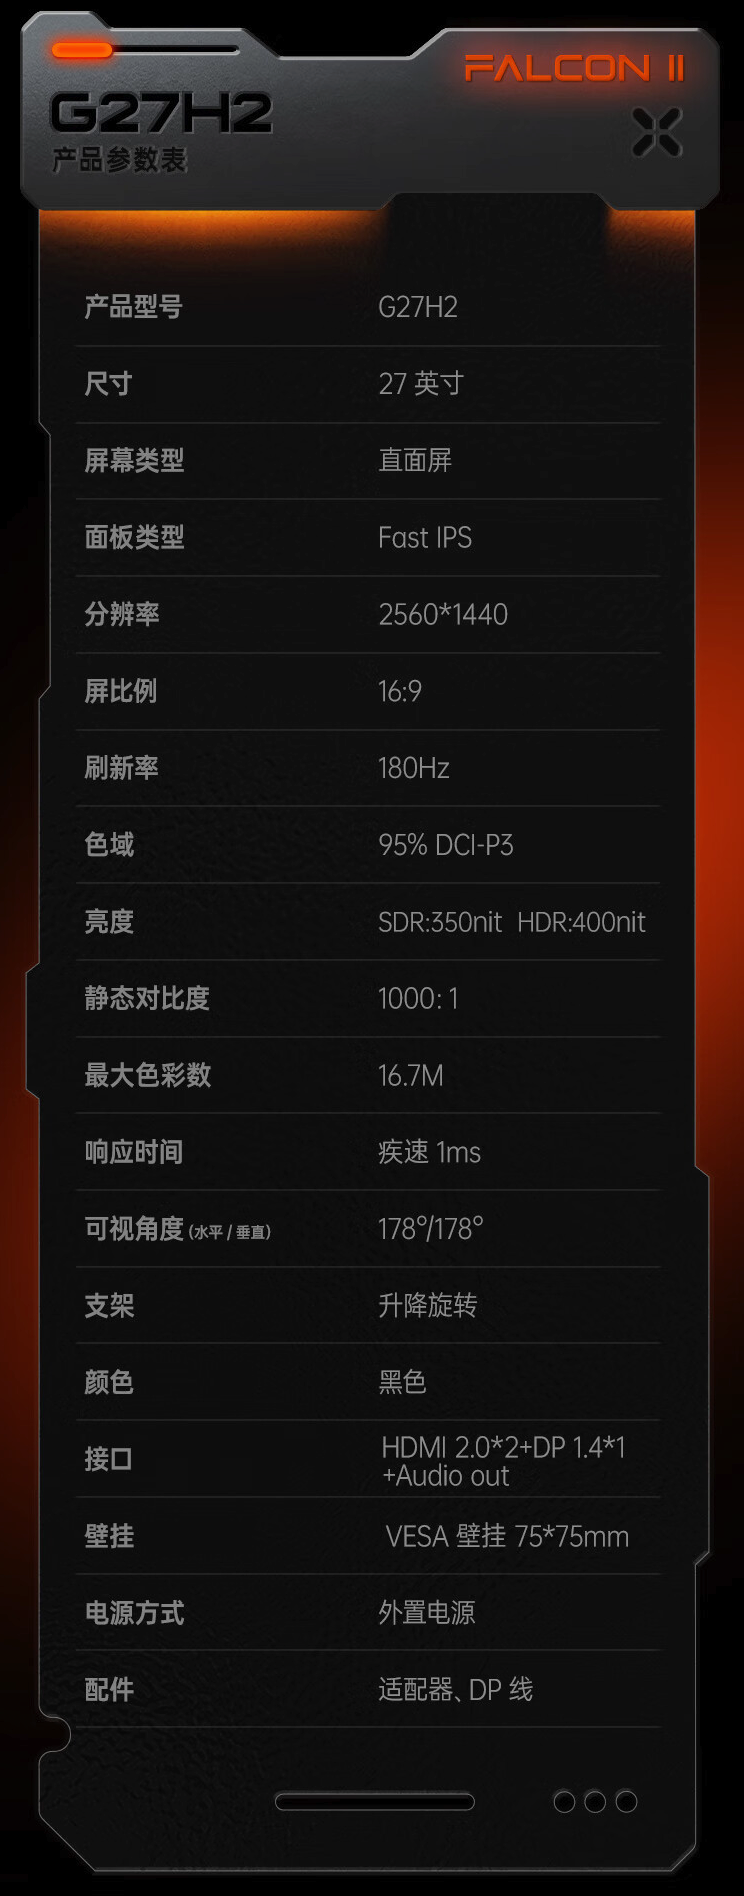 HKC 推出 G27H2 猎鹰二代显示器：2K 180Hz、Fast IPS 面板、HDR 400